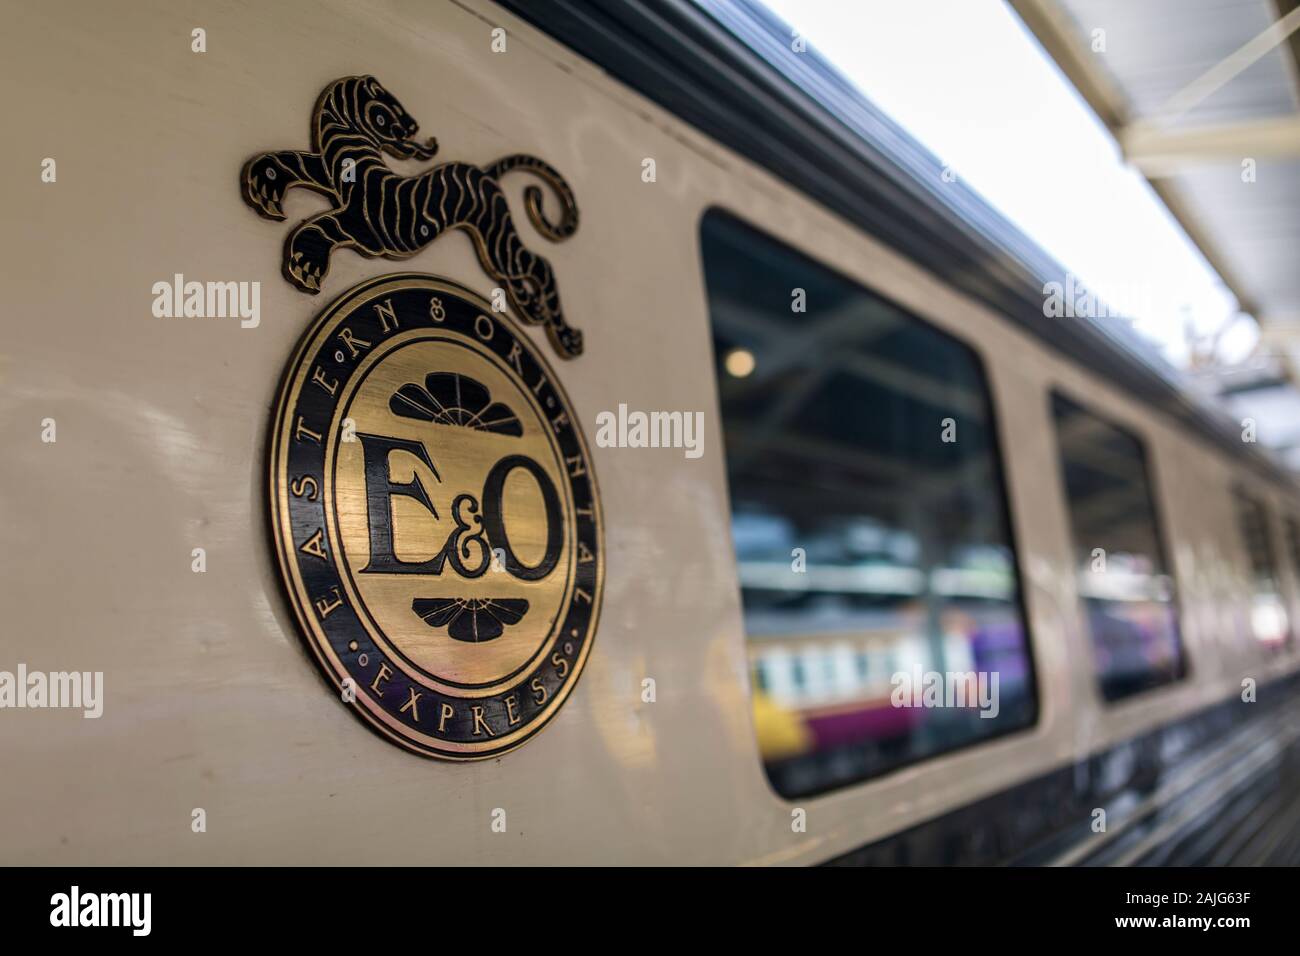 BANGKOK, THAILAND - MARCH 24, 2017: Eastern & Oriental Express at Hualamphong Station in Bangkok, Thailand on March 24, 2017. Stock Photo